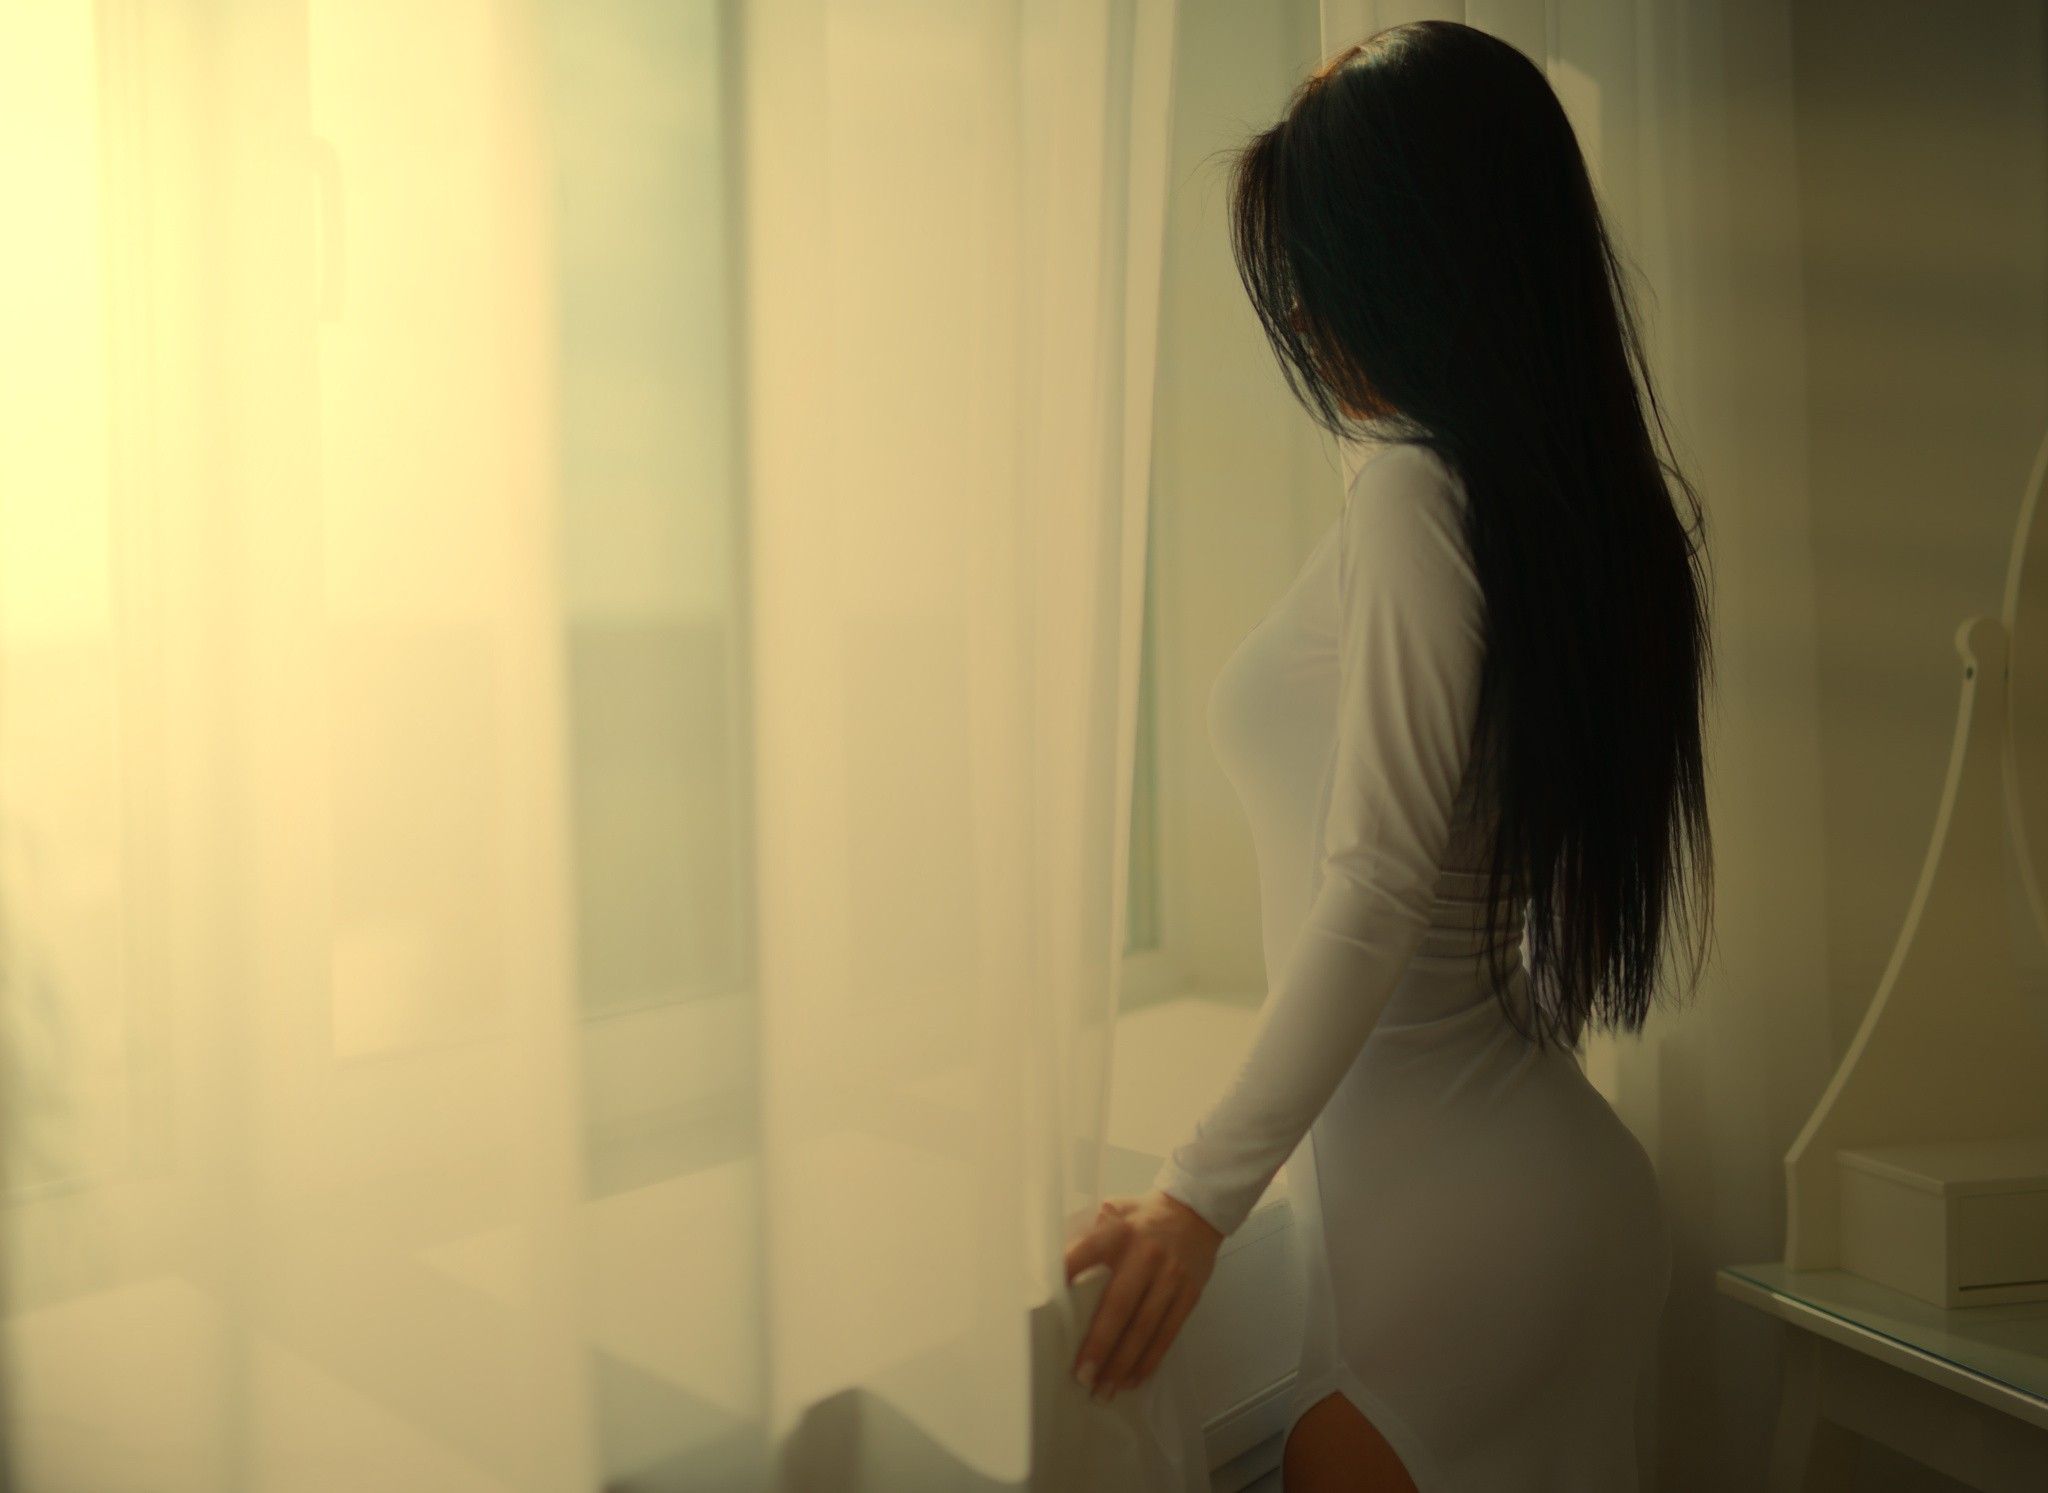 #long hair, #white dress, #window, #black hair, #women